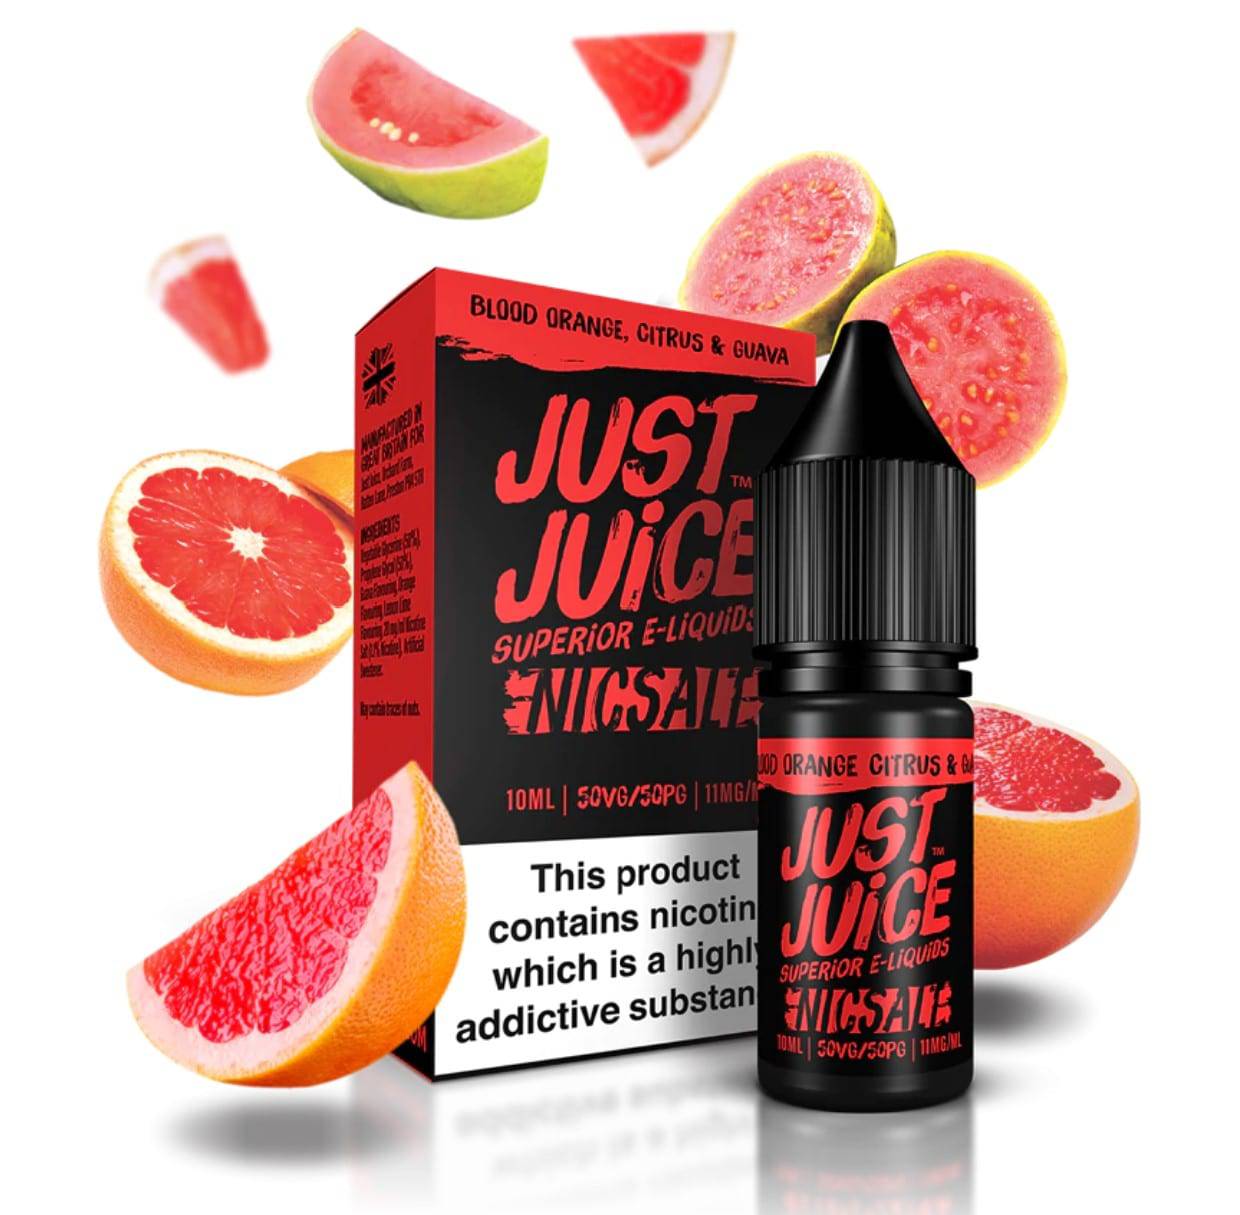 JUST JUICE - Blood Orange, Citrus & Guava 10ml E-Liquid - The British Vape Company